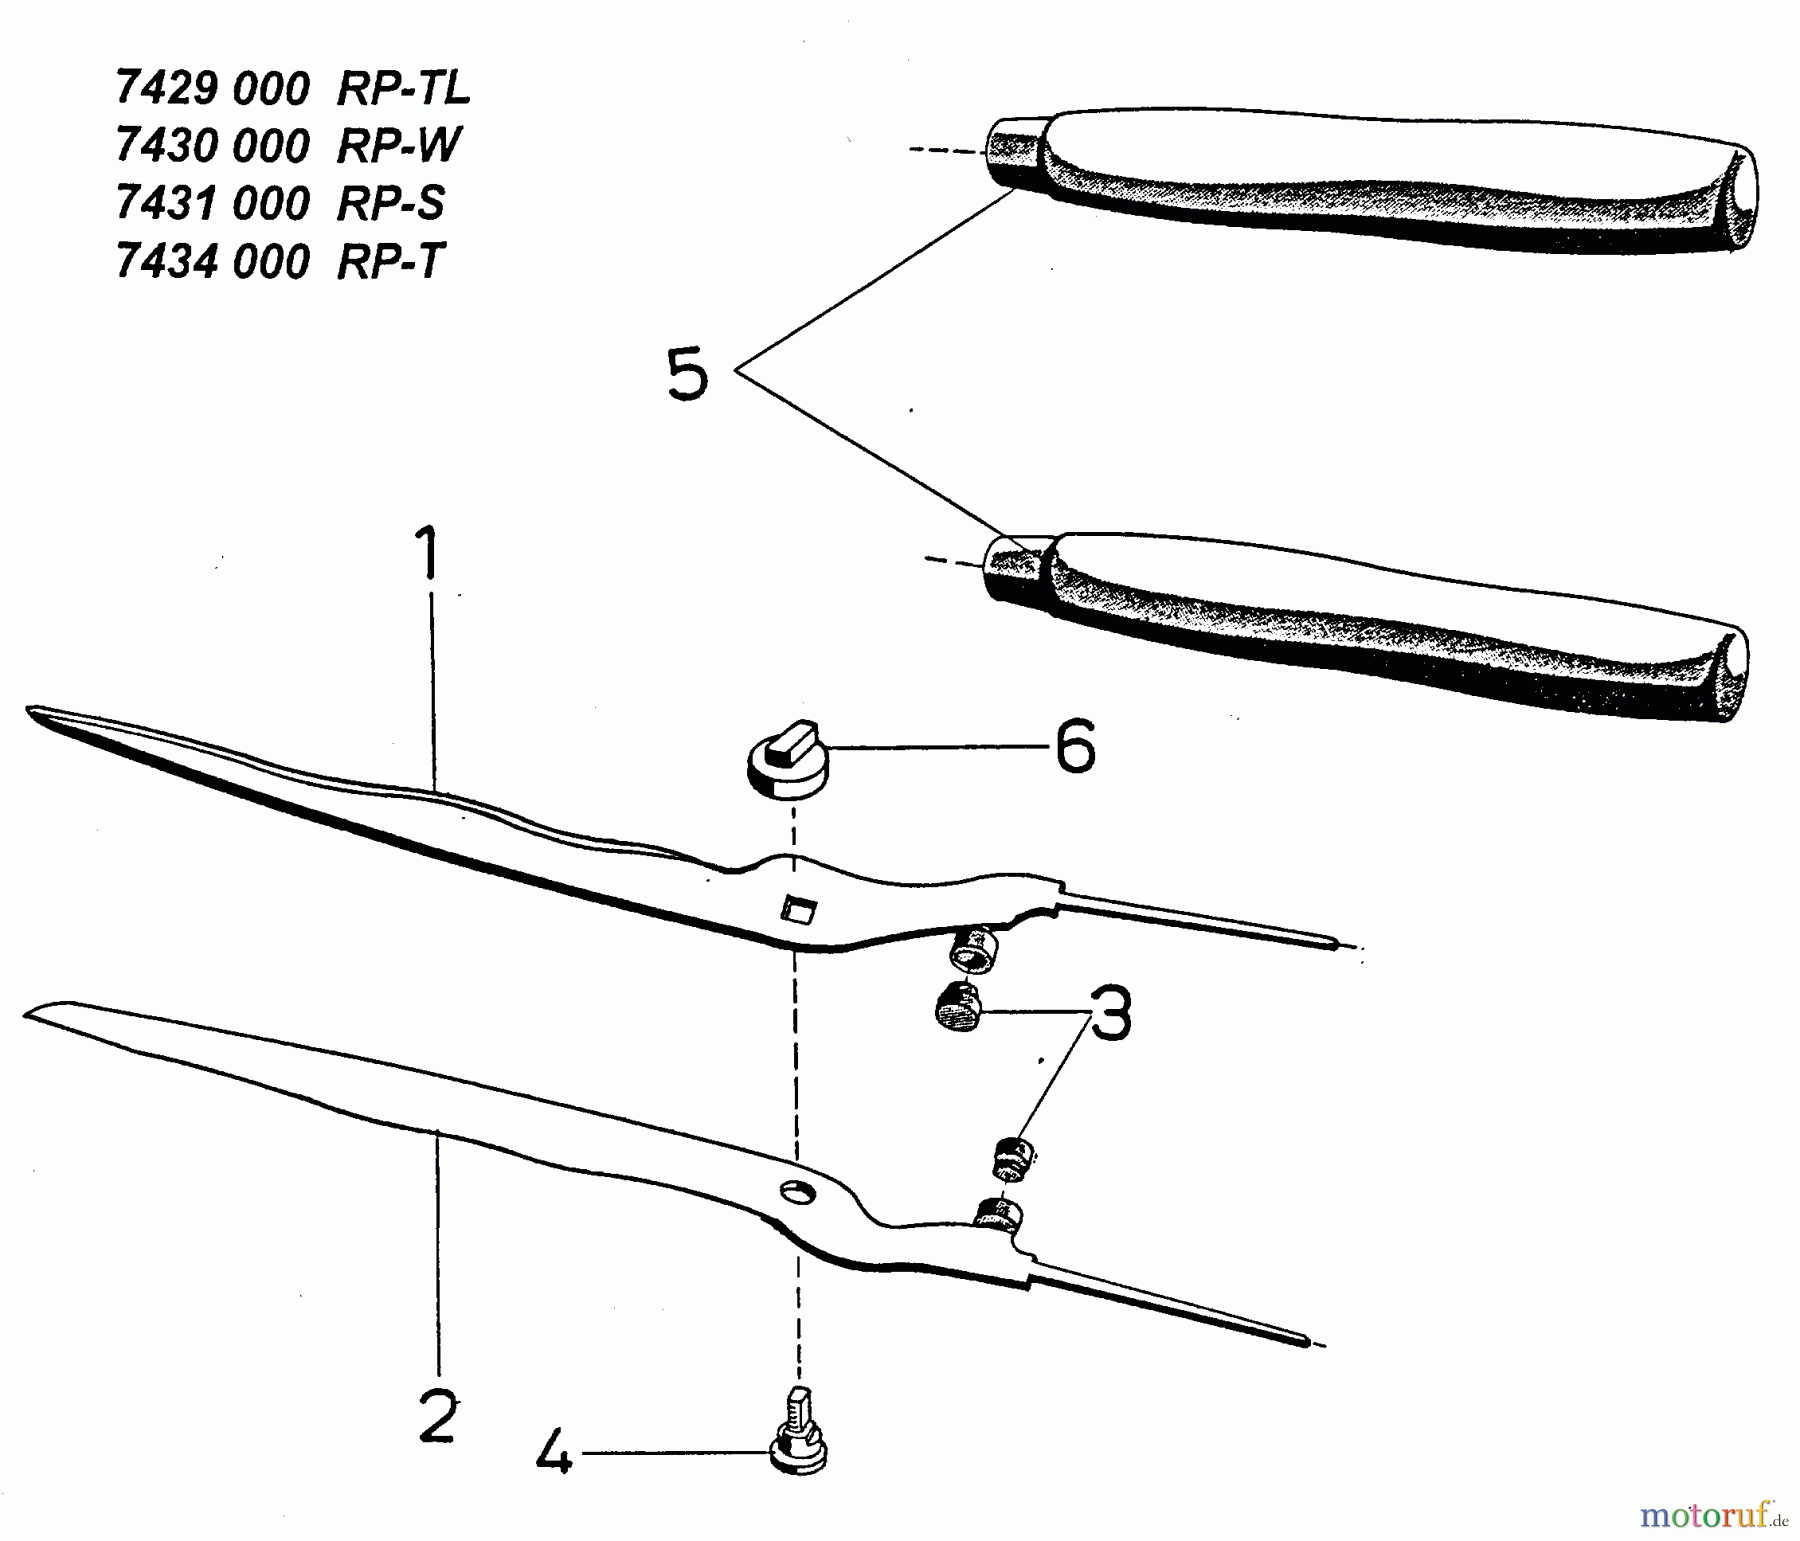  Wolf-Garten Hedge shears manually operated RP-W 7430000  (1998) Basic machine